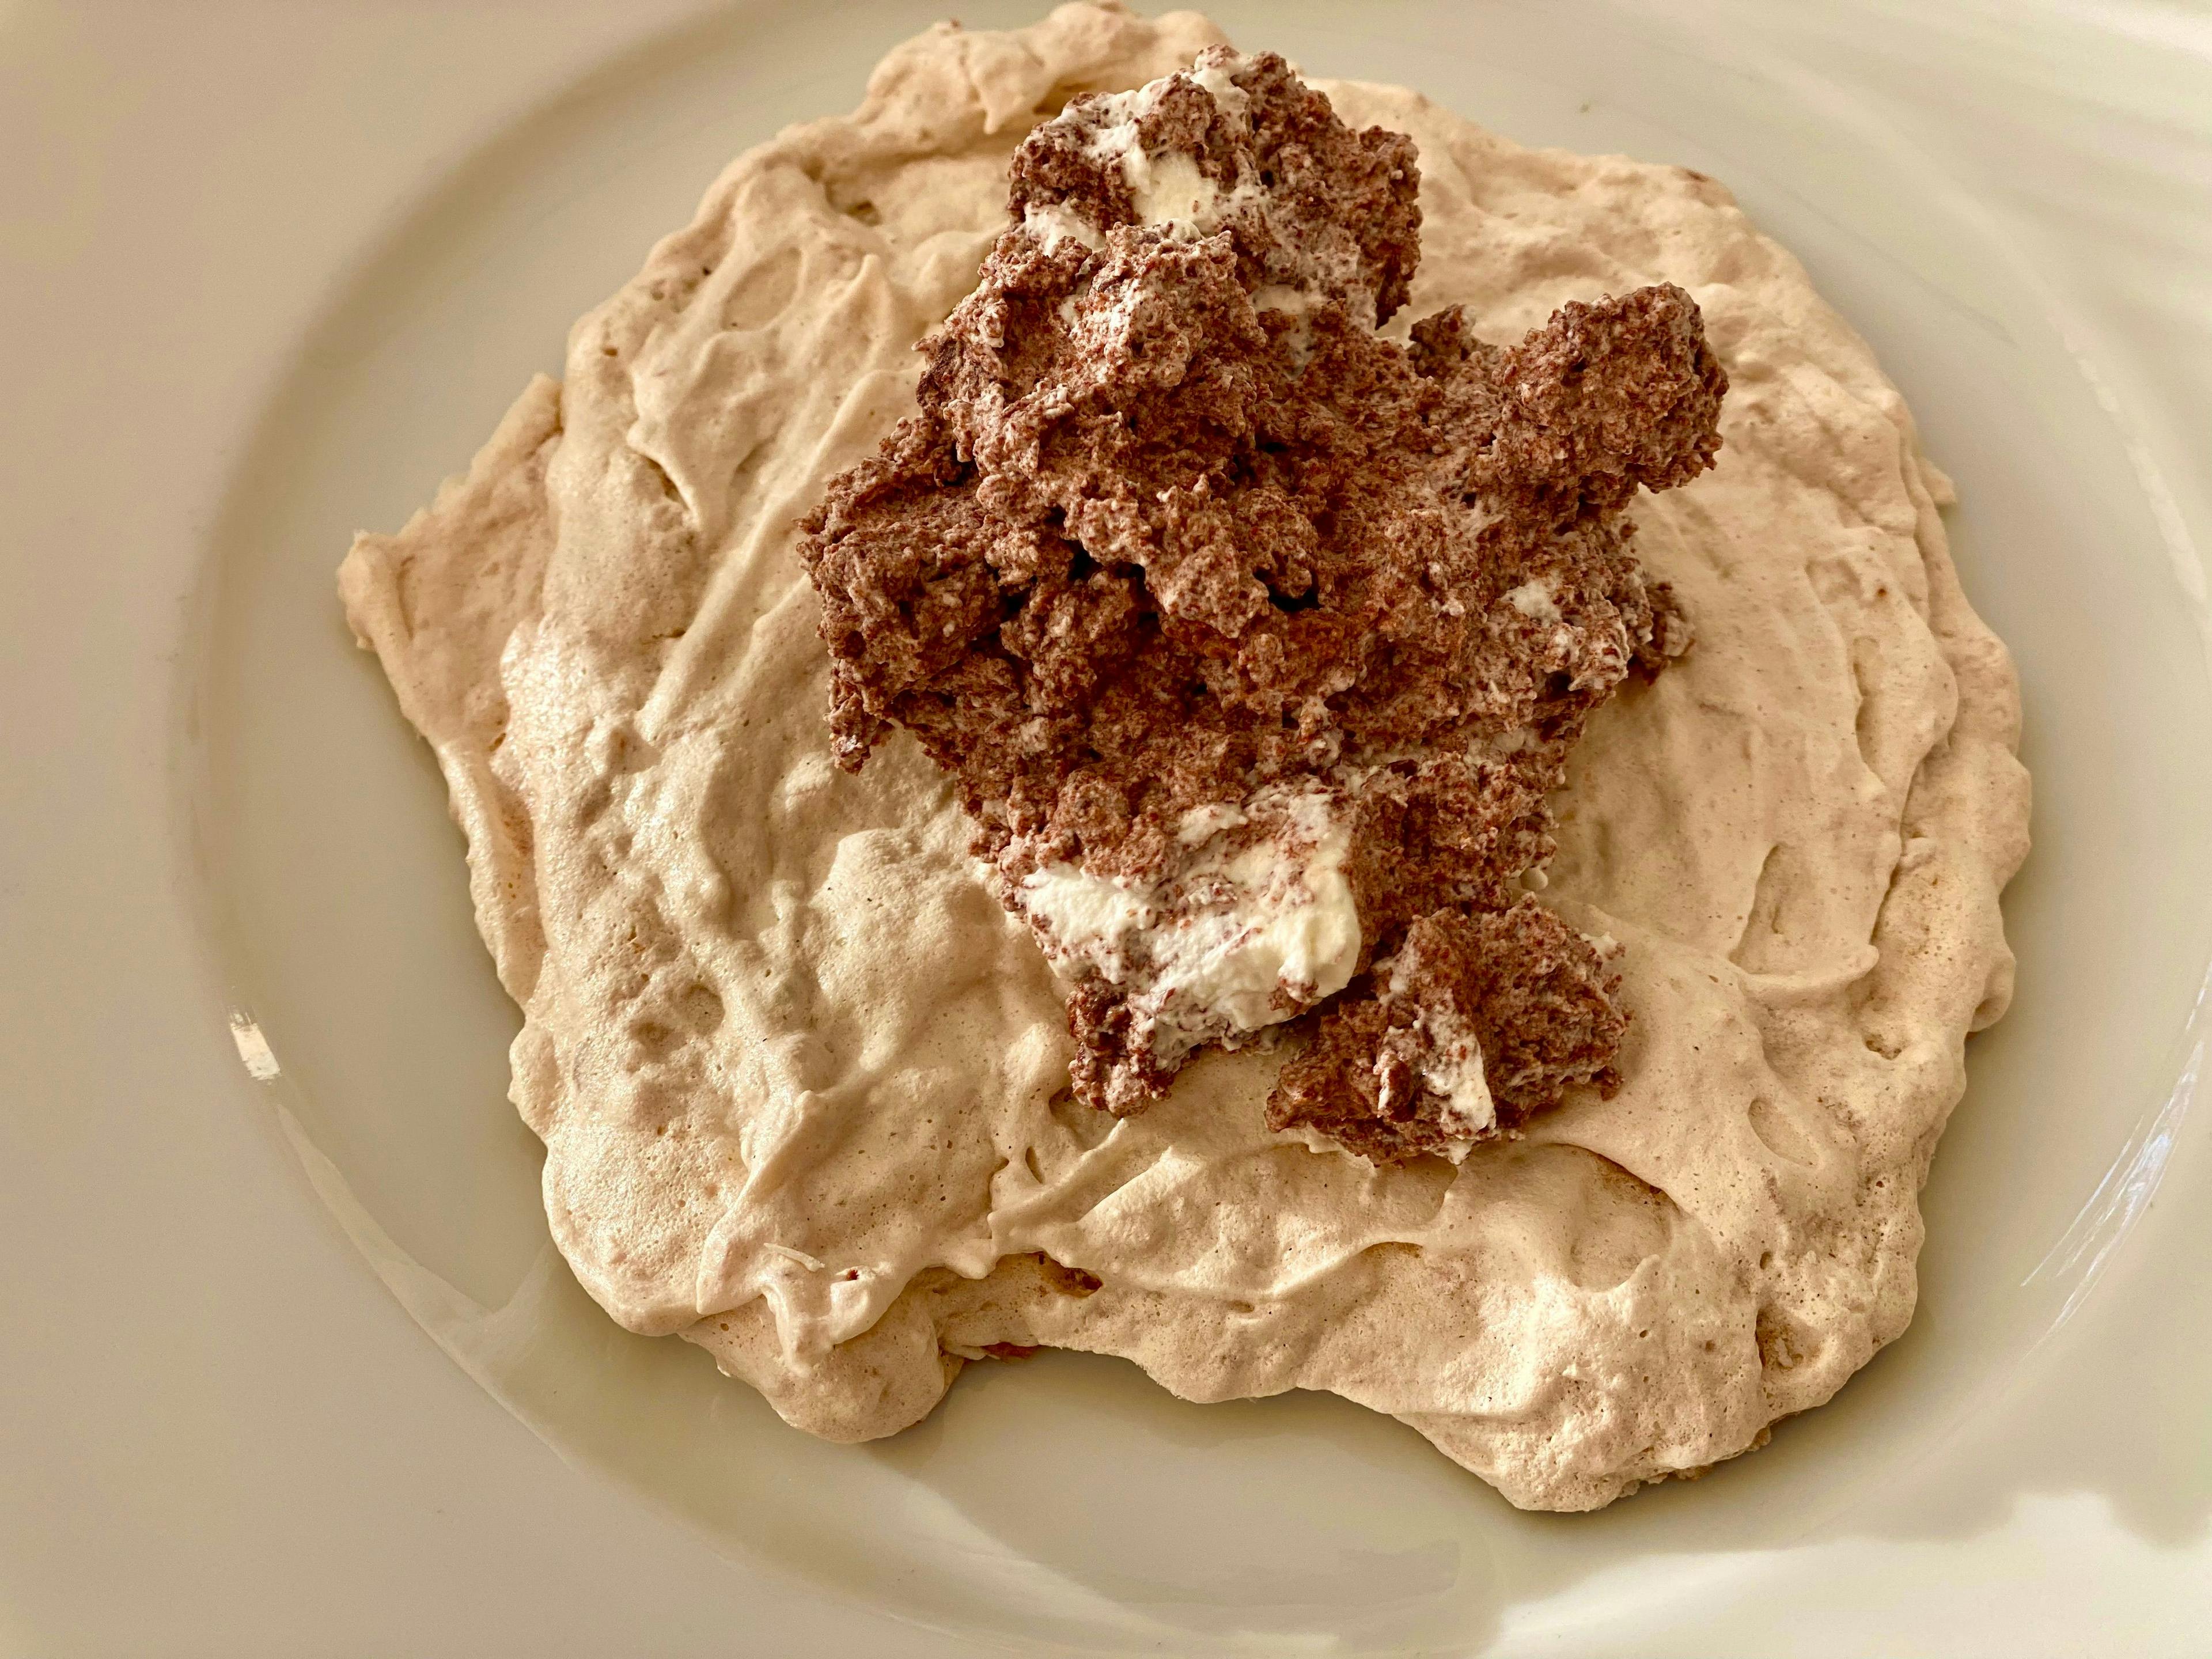 meringue with chocolate cream on top